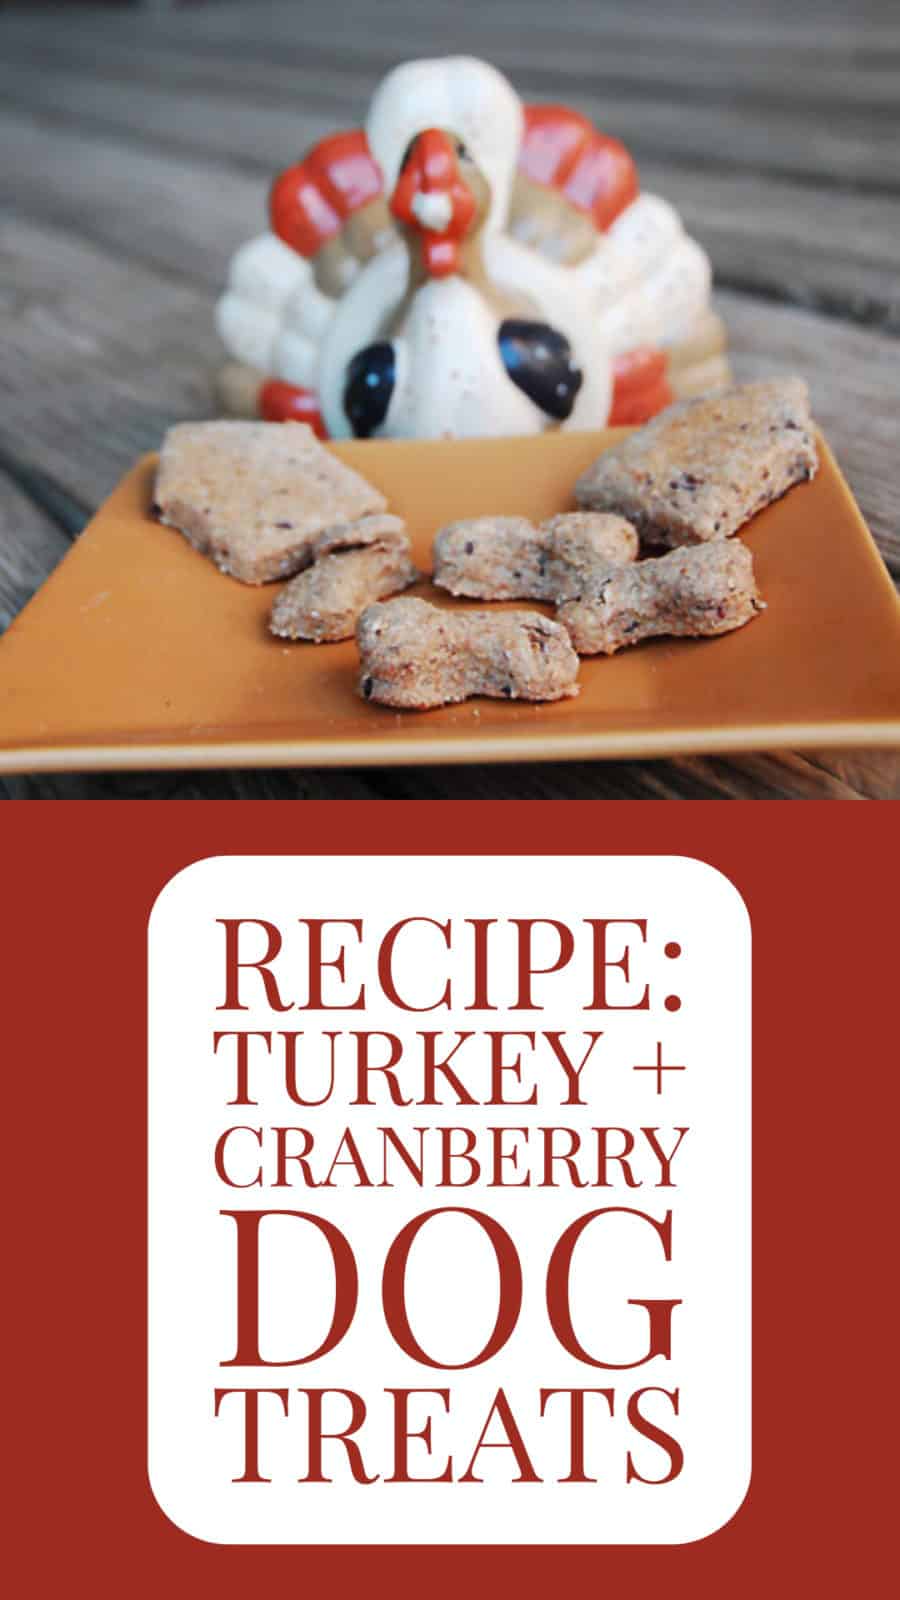 How to Make Turkey and Cranberry Dog Treats